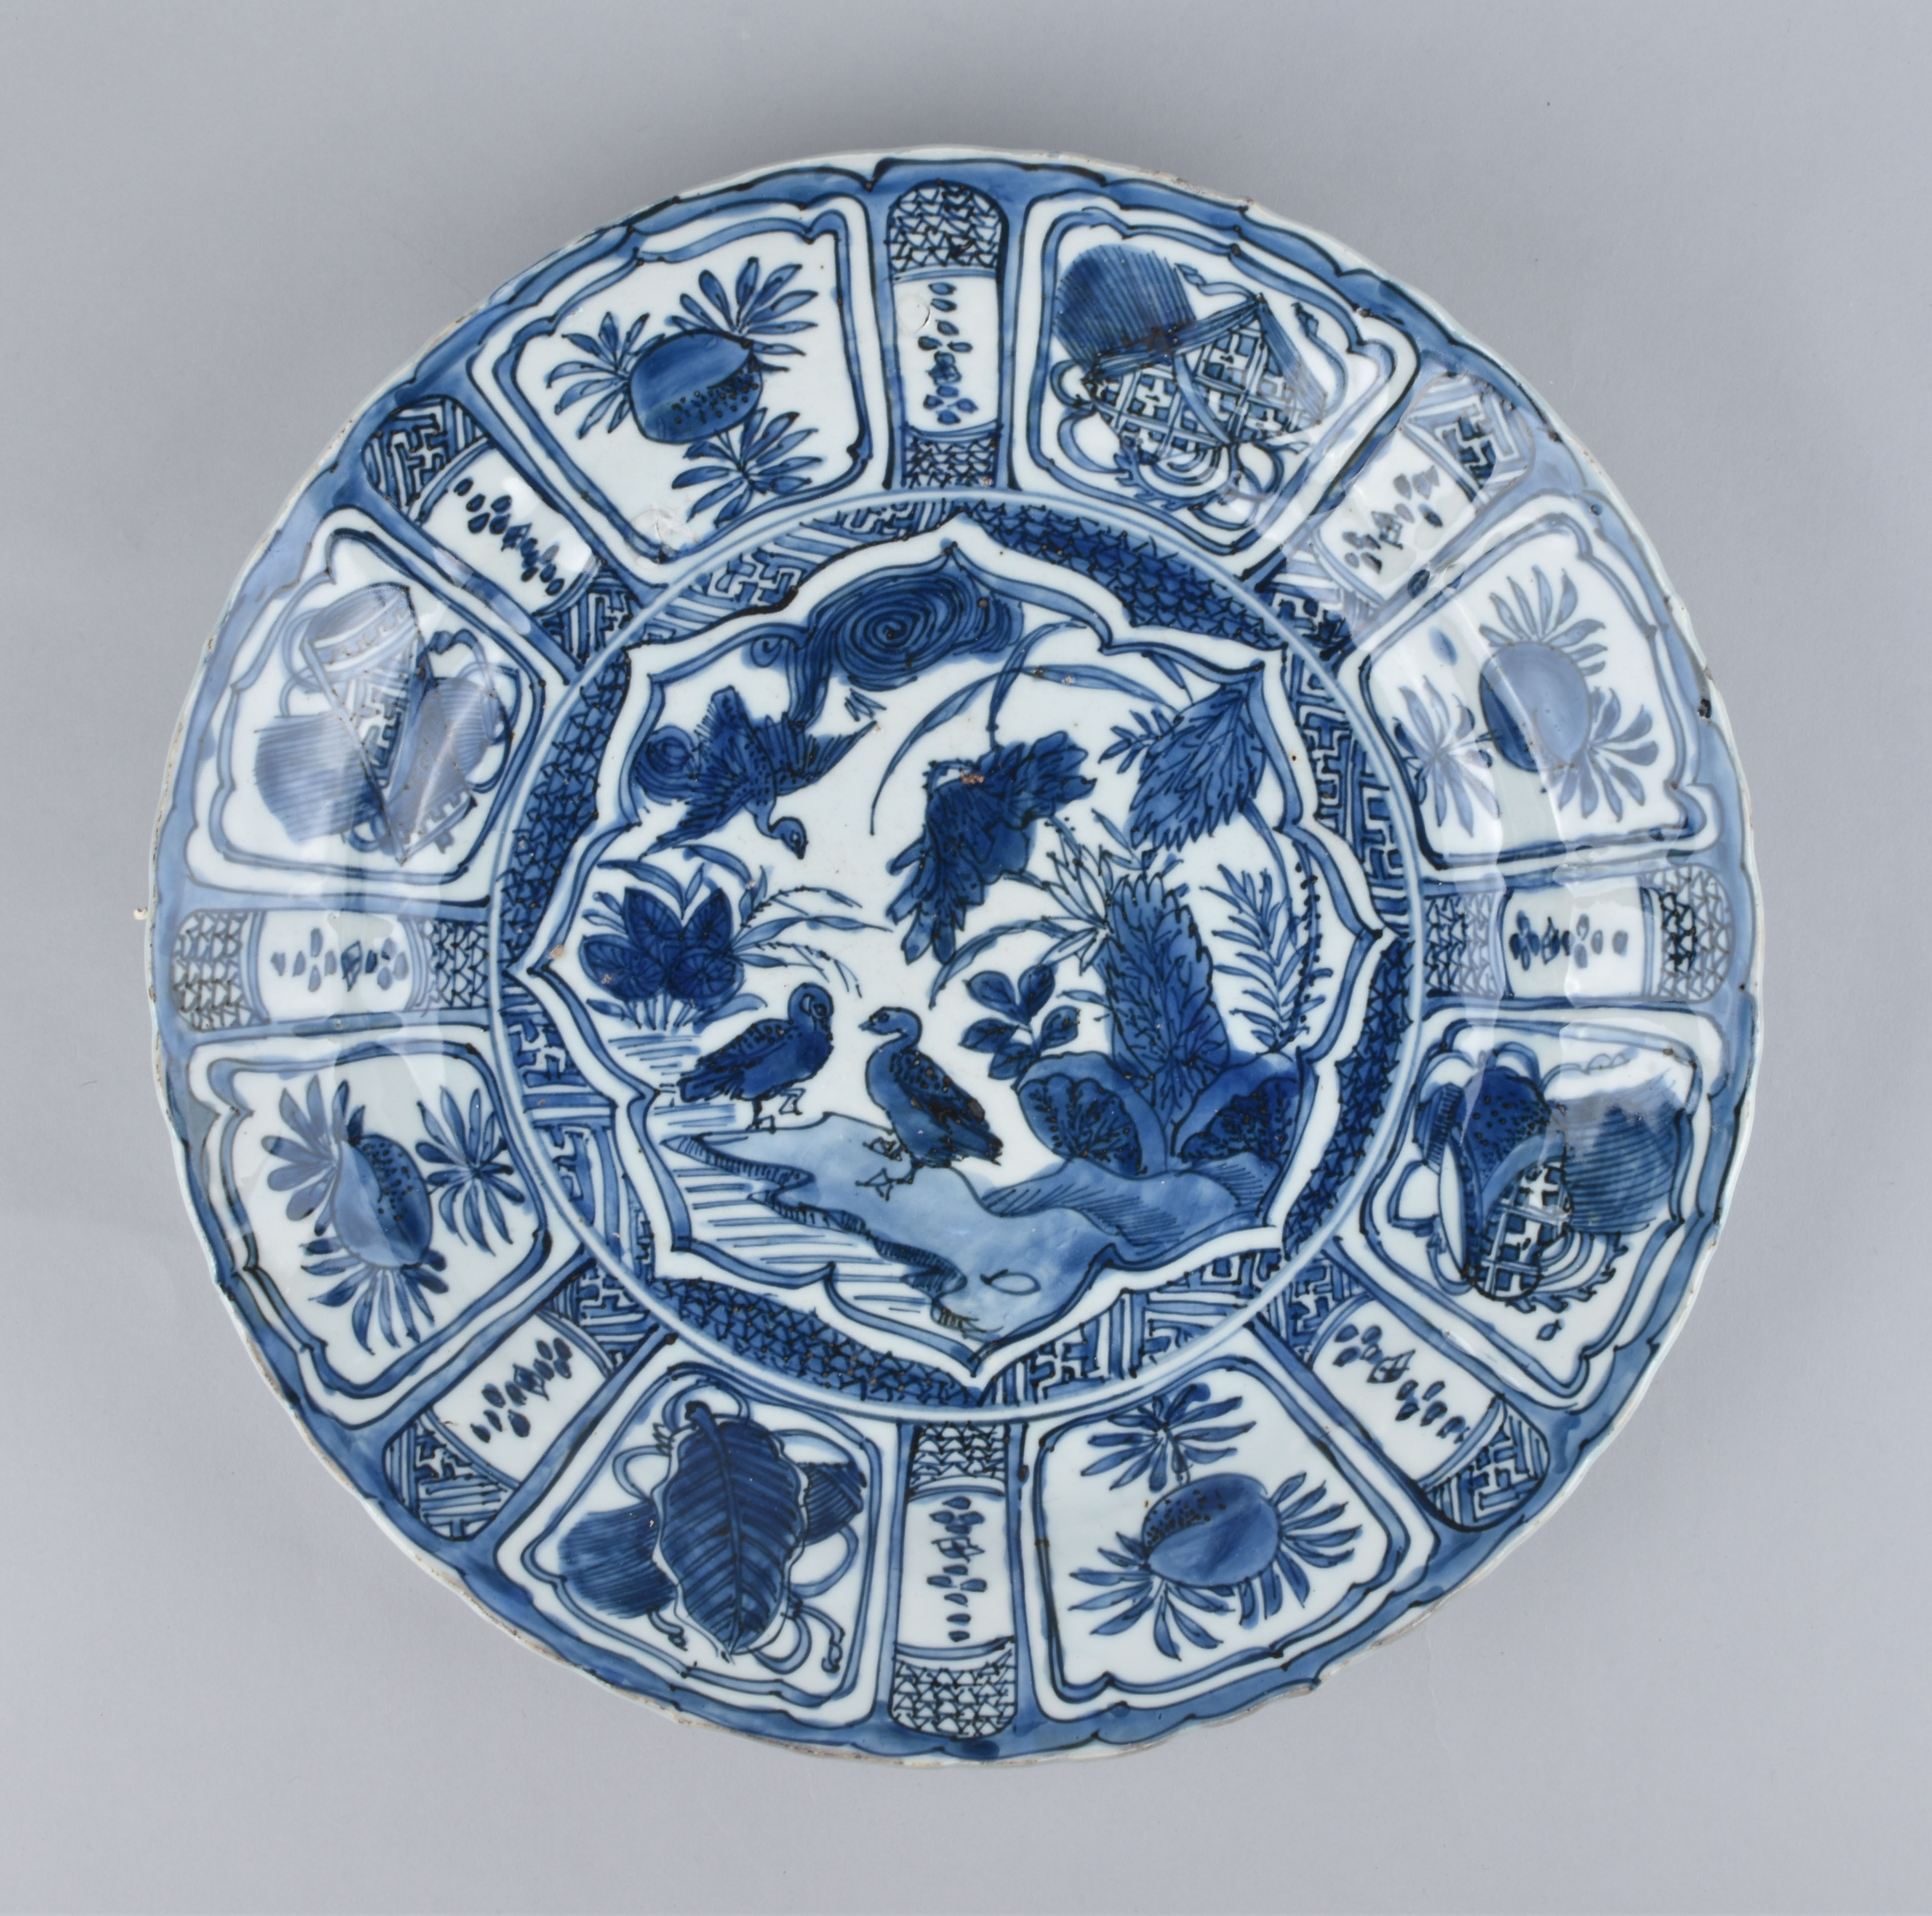 Porcelaine Dynastie Ming, époque Wanli (1573-1619), China